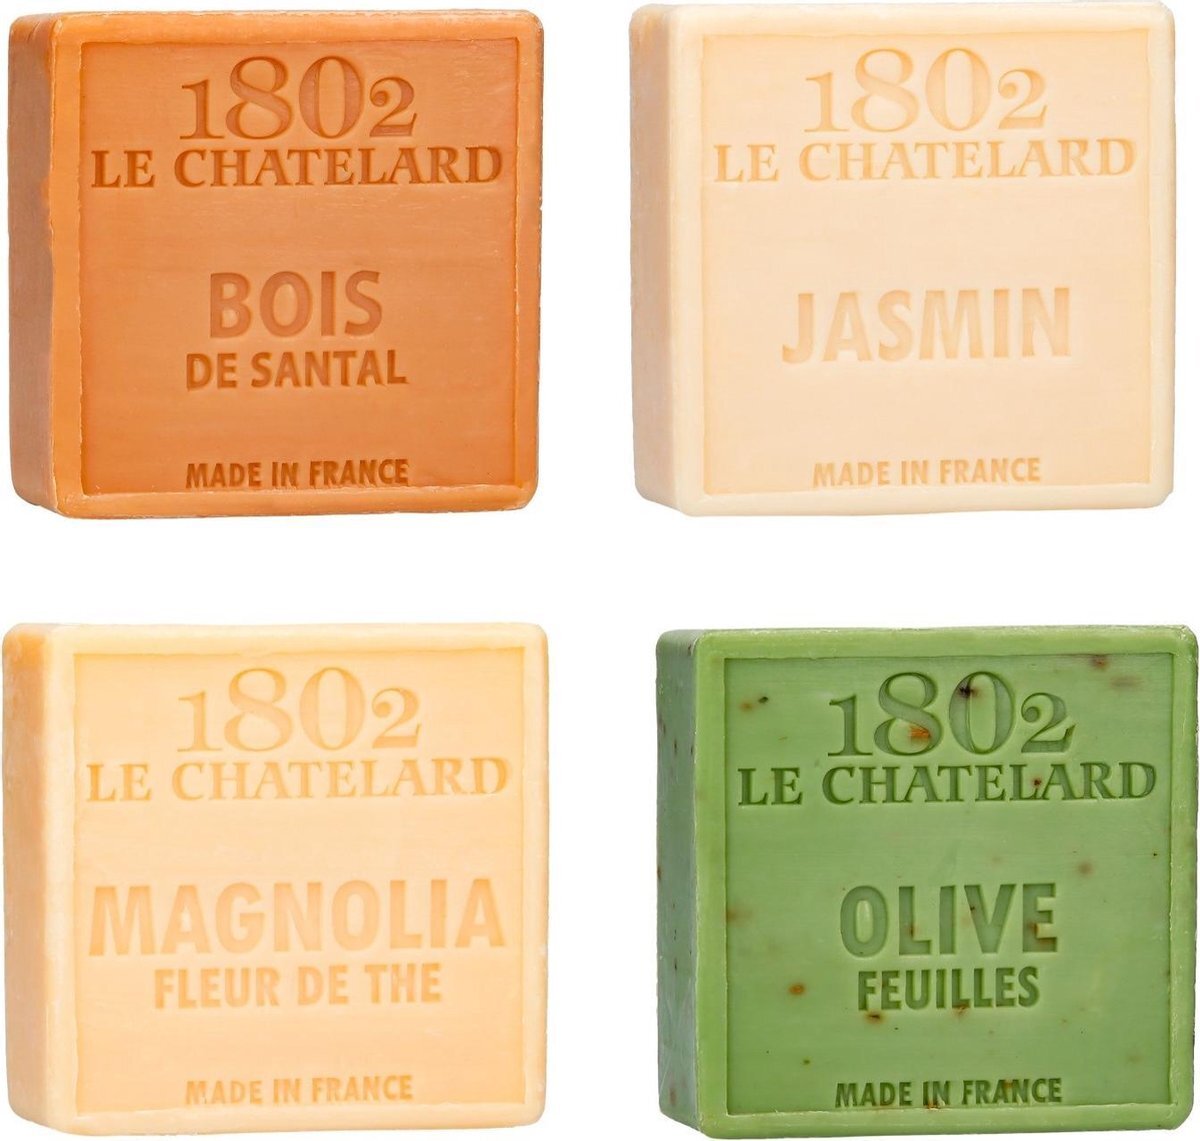 Le Chatelard 1802 Marseille zeep 4 x 100 gram zachte, palmolie vrije zeep, met olijfolie - Franse handzeep - Marseillezeep